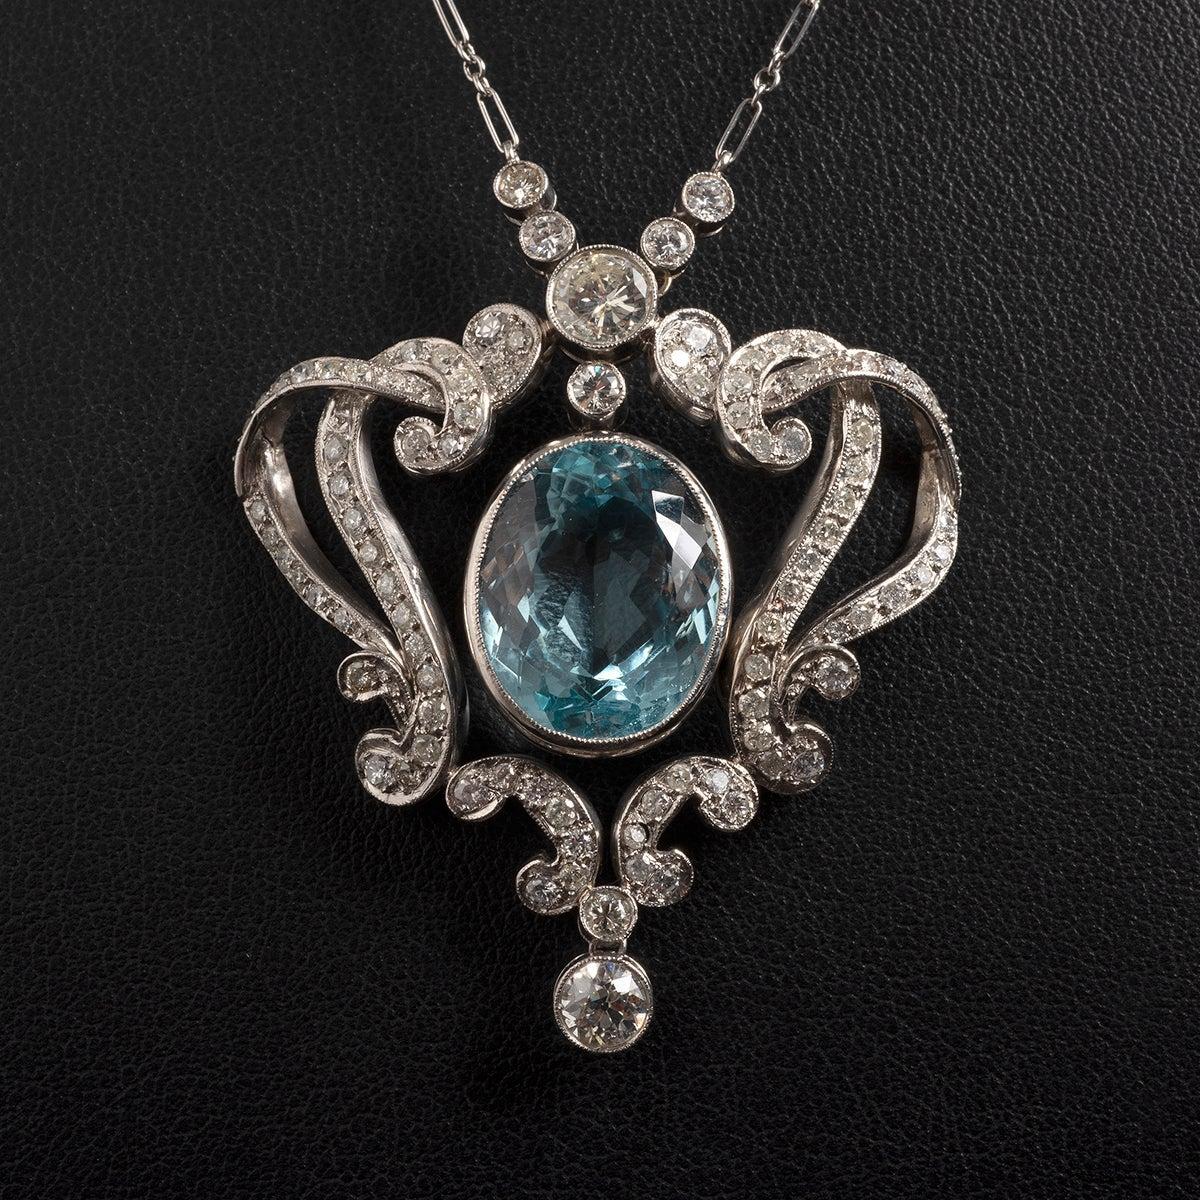 Women's Victorian Oval Cut Aquamarine with Diamond Surround Necklace